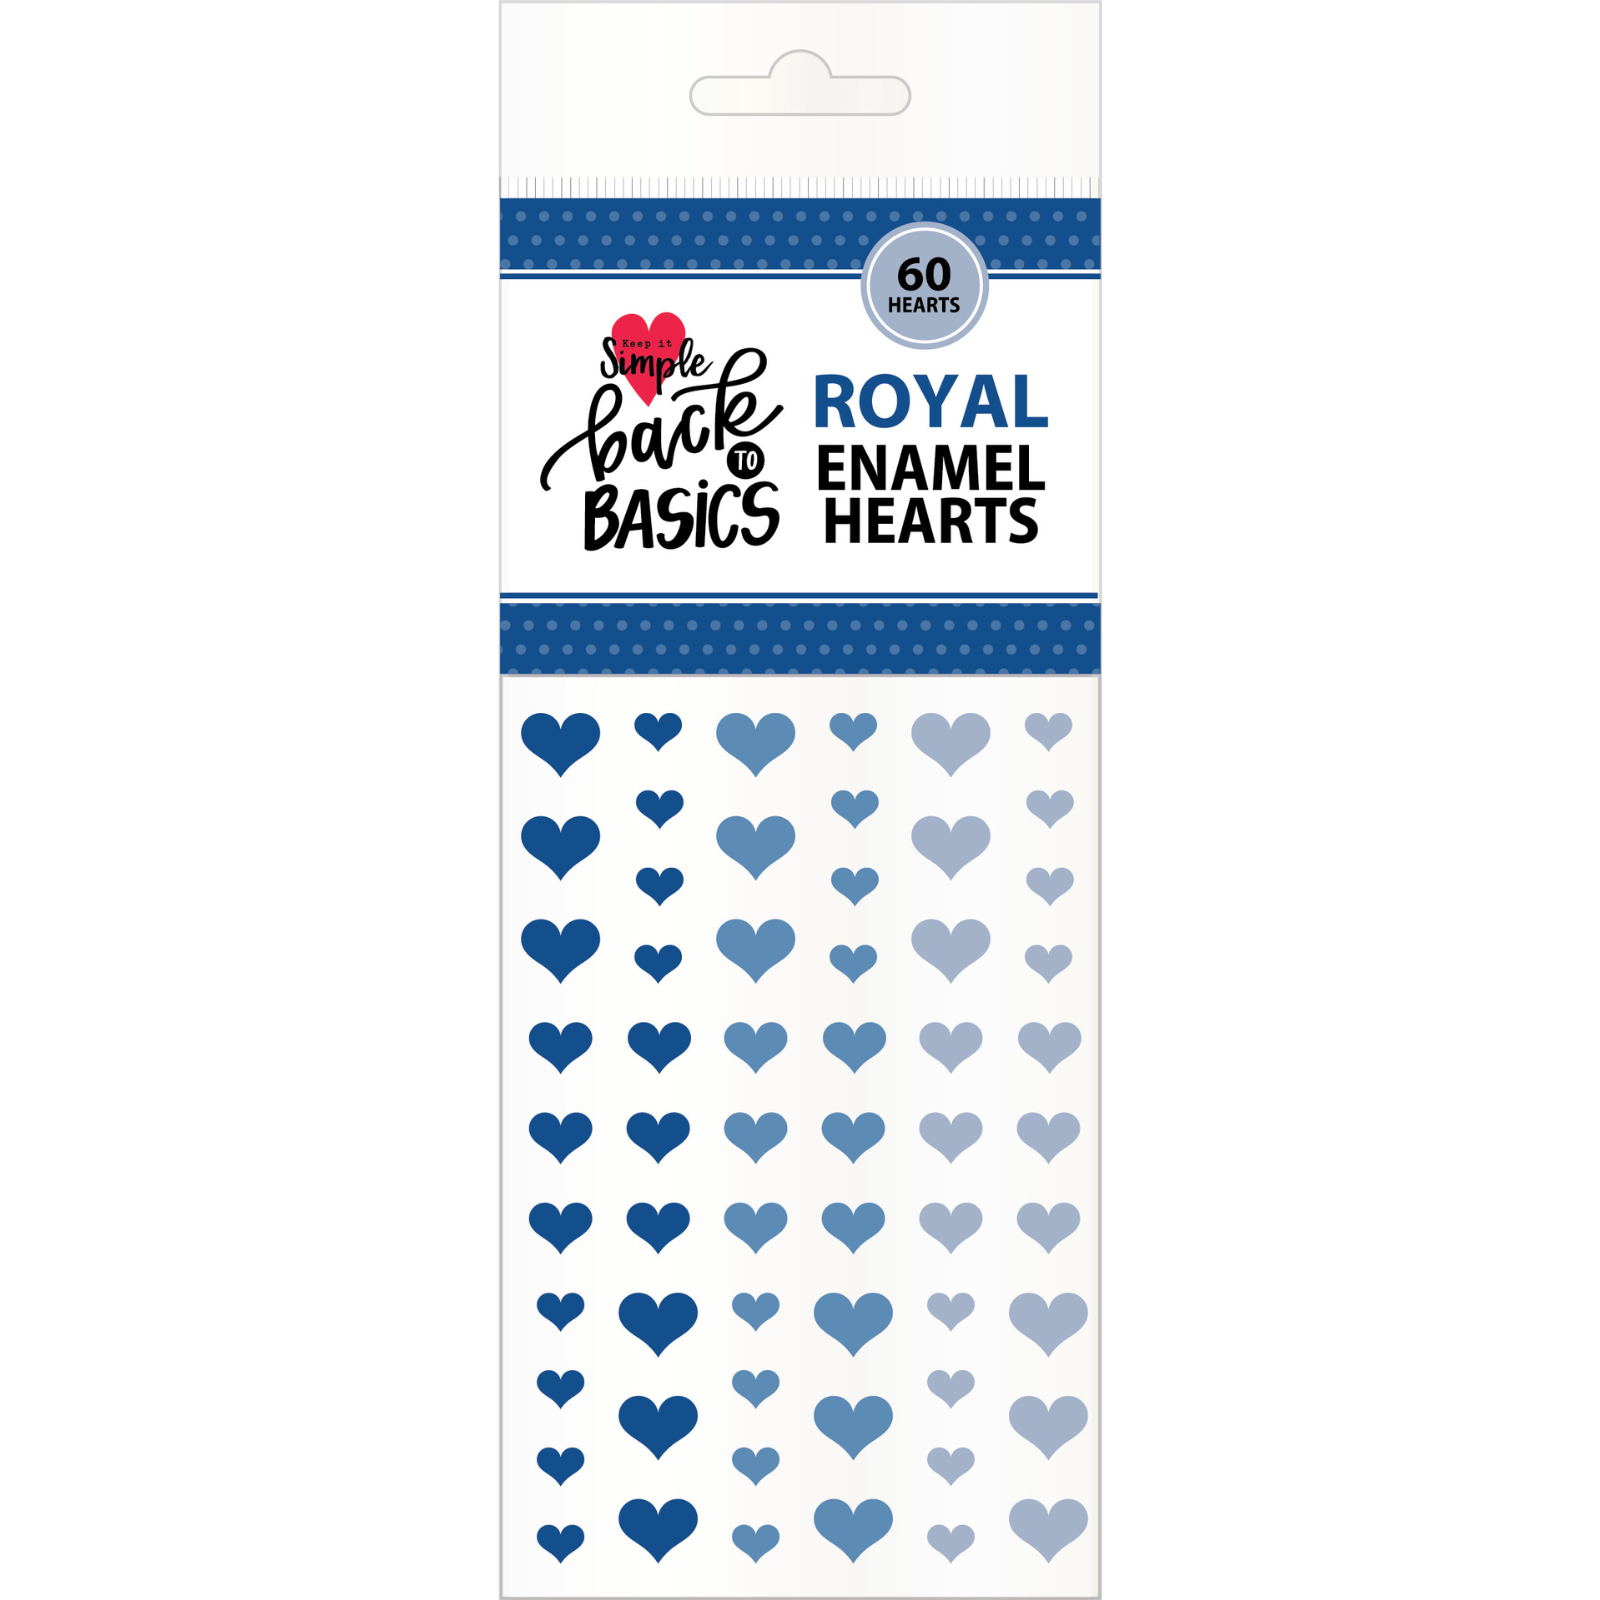 Back To Basics Royal Enamel Hearts